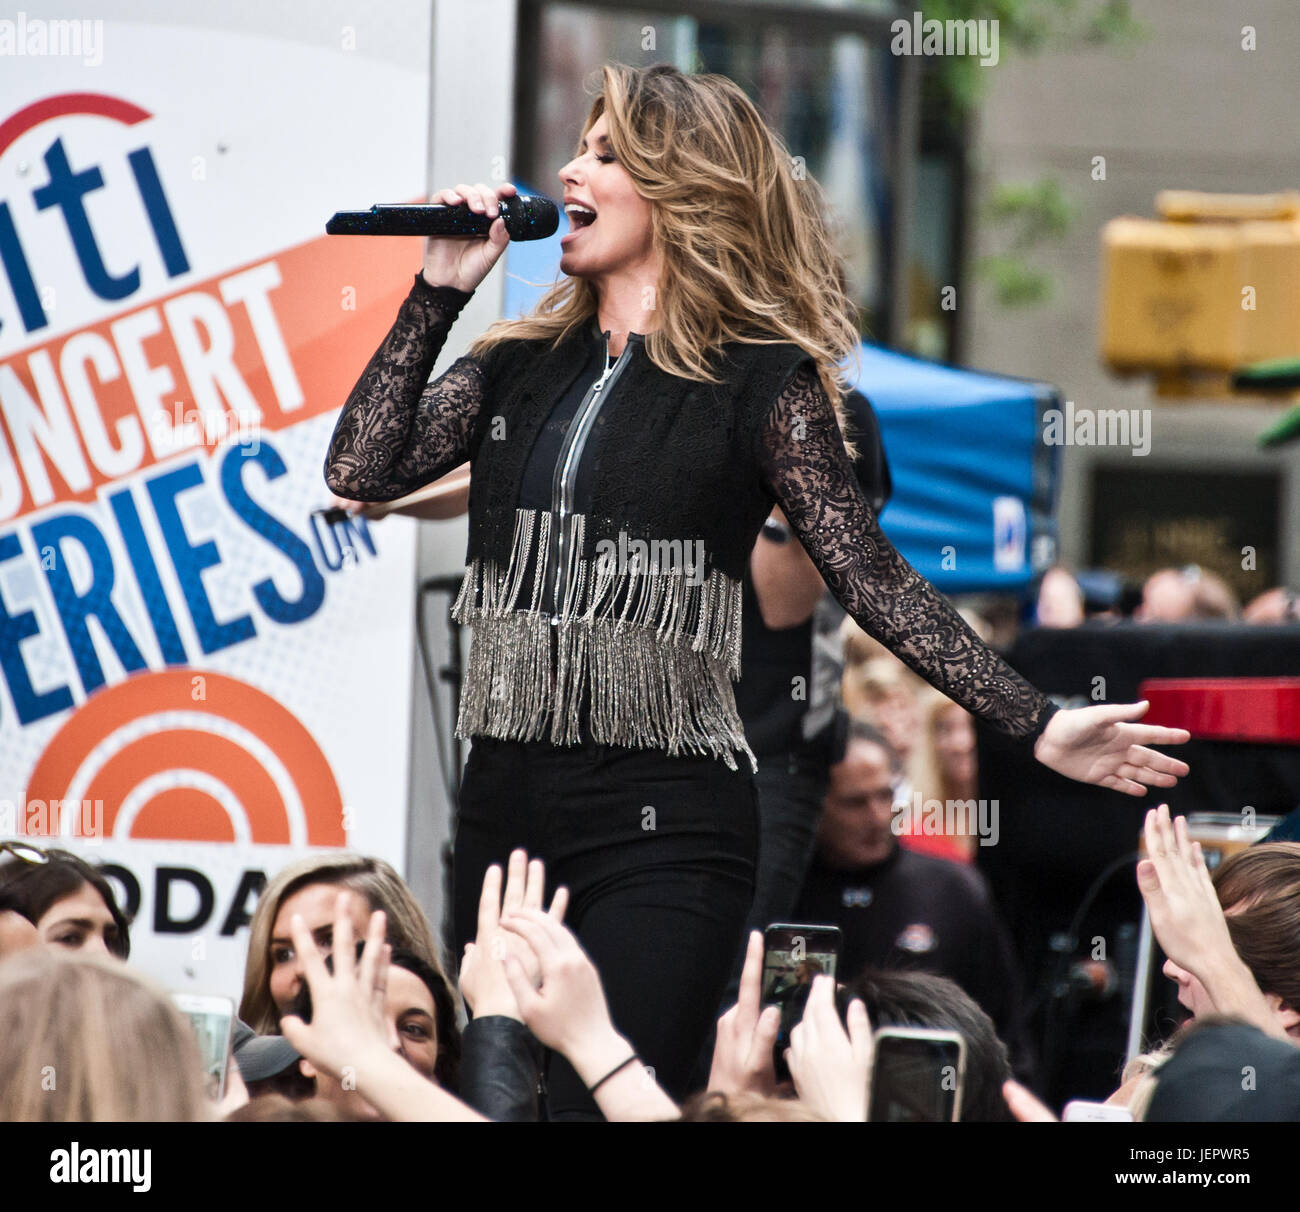 New York City, NY, USA. 16th June, 2017. Shania Twain Performs on NBC's 'Today' Show Concert Series at Rockefeller Plaza. Stock Photo